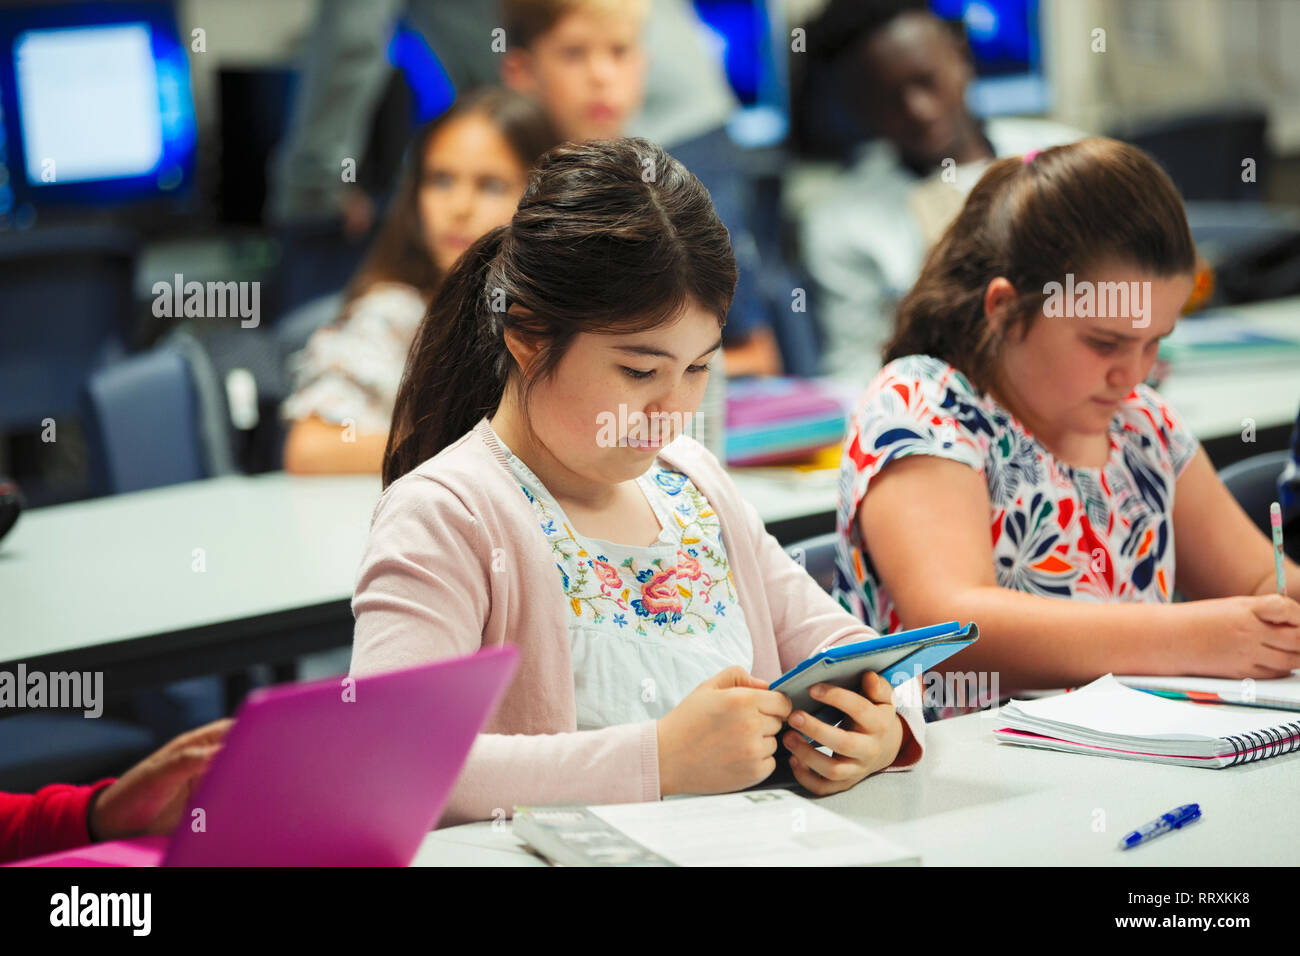 Focused junior high school girl student using digital tablet in classroom Stock Photo